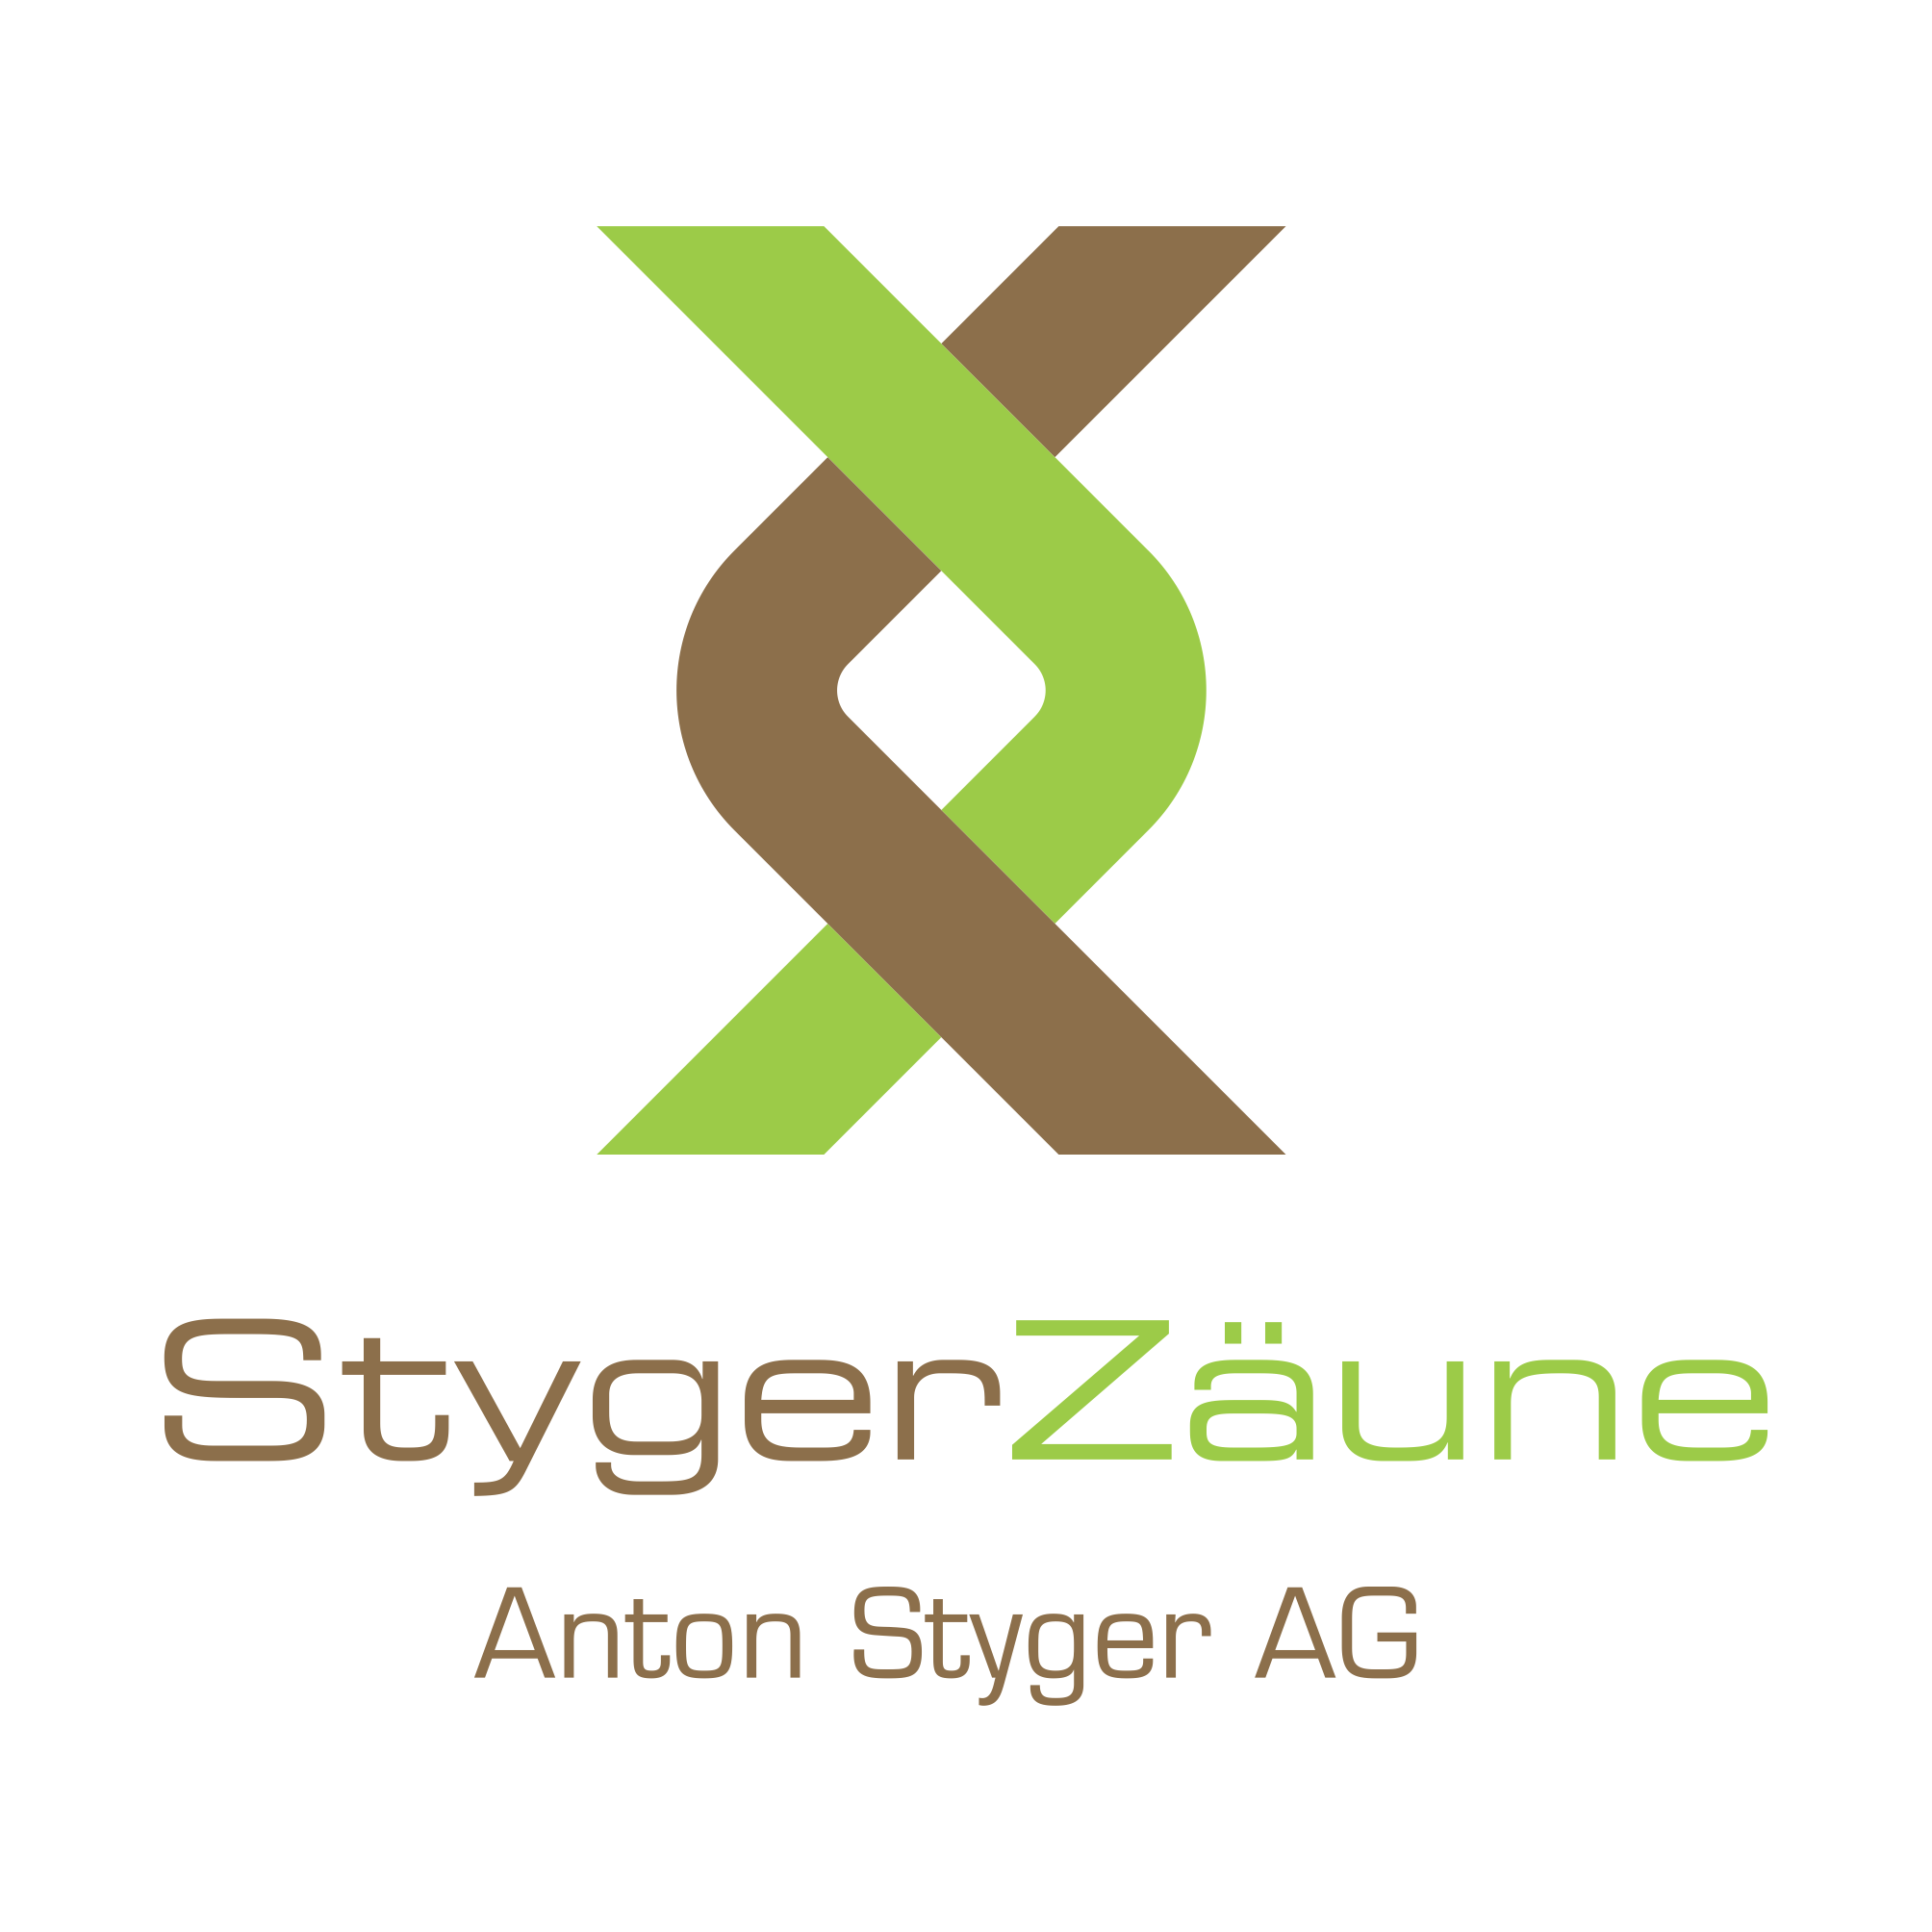 Anton Styger AG Zaunfabrik